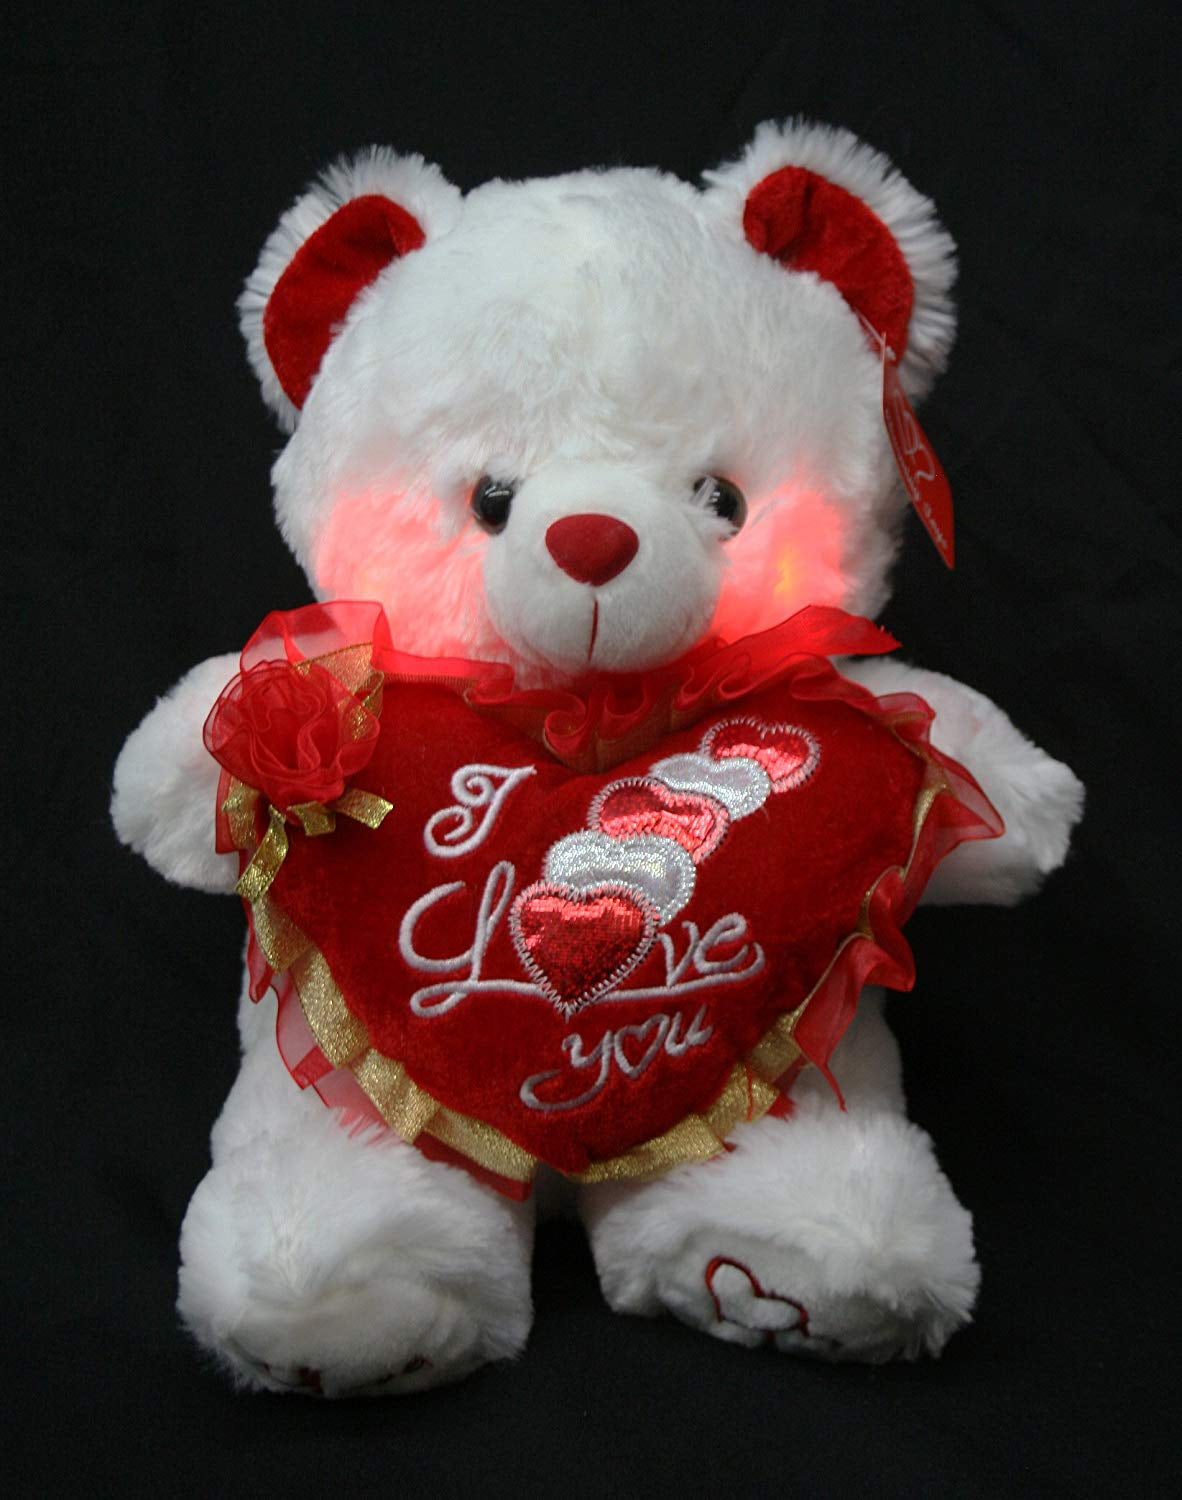 Cute Soft Cuddly NEW I LOVE JUSTIN Teddy Bear Gift Present Birthday Xmas Valentine London Teddy Bears 